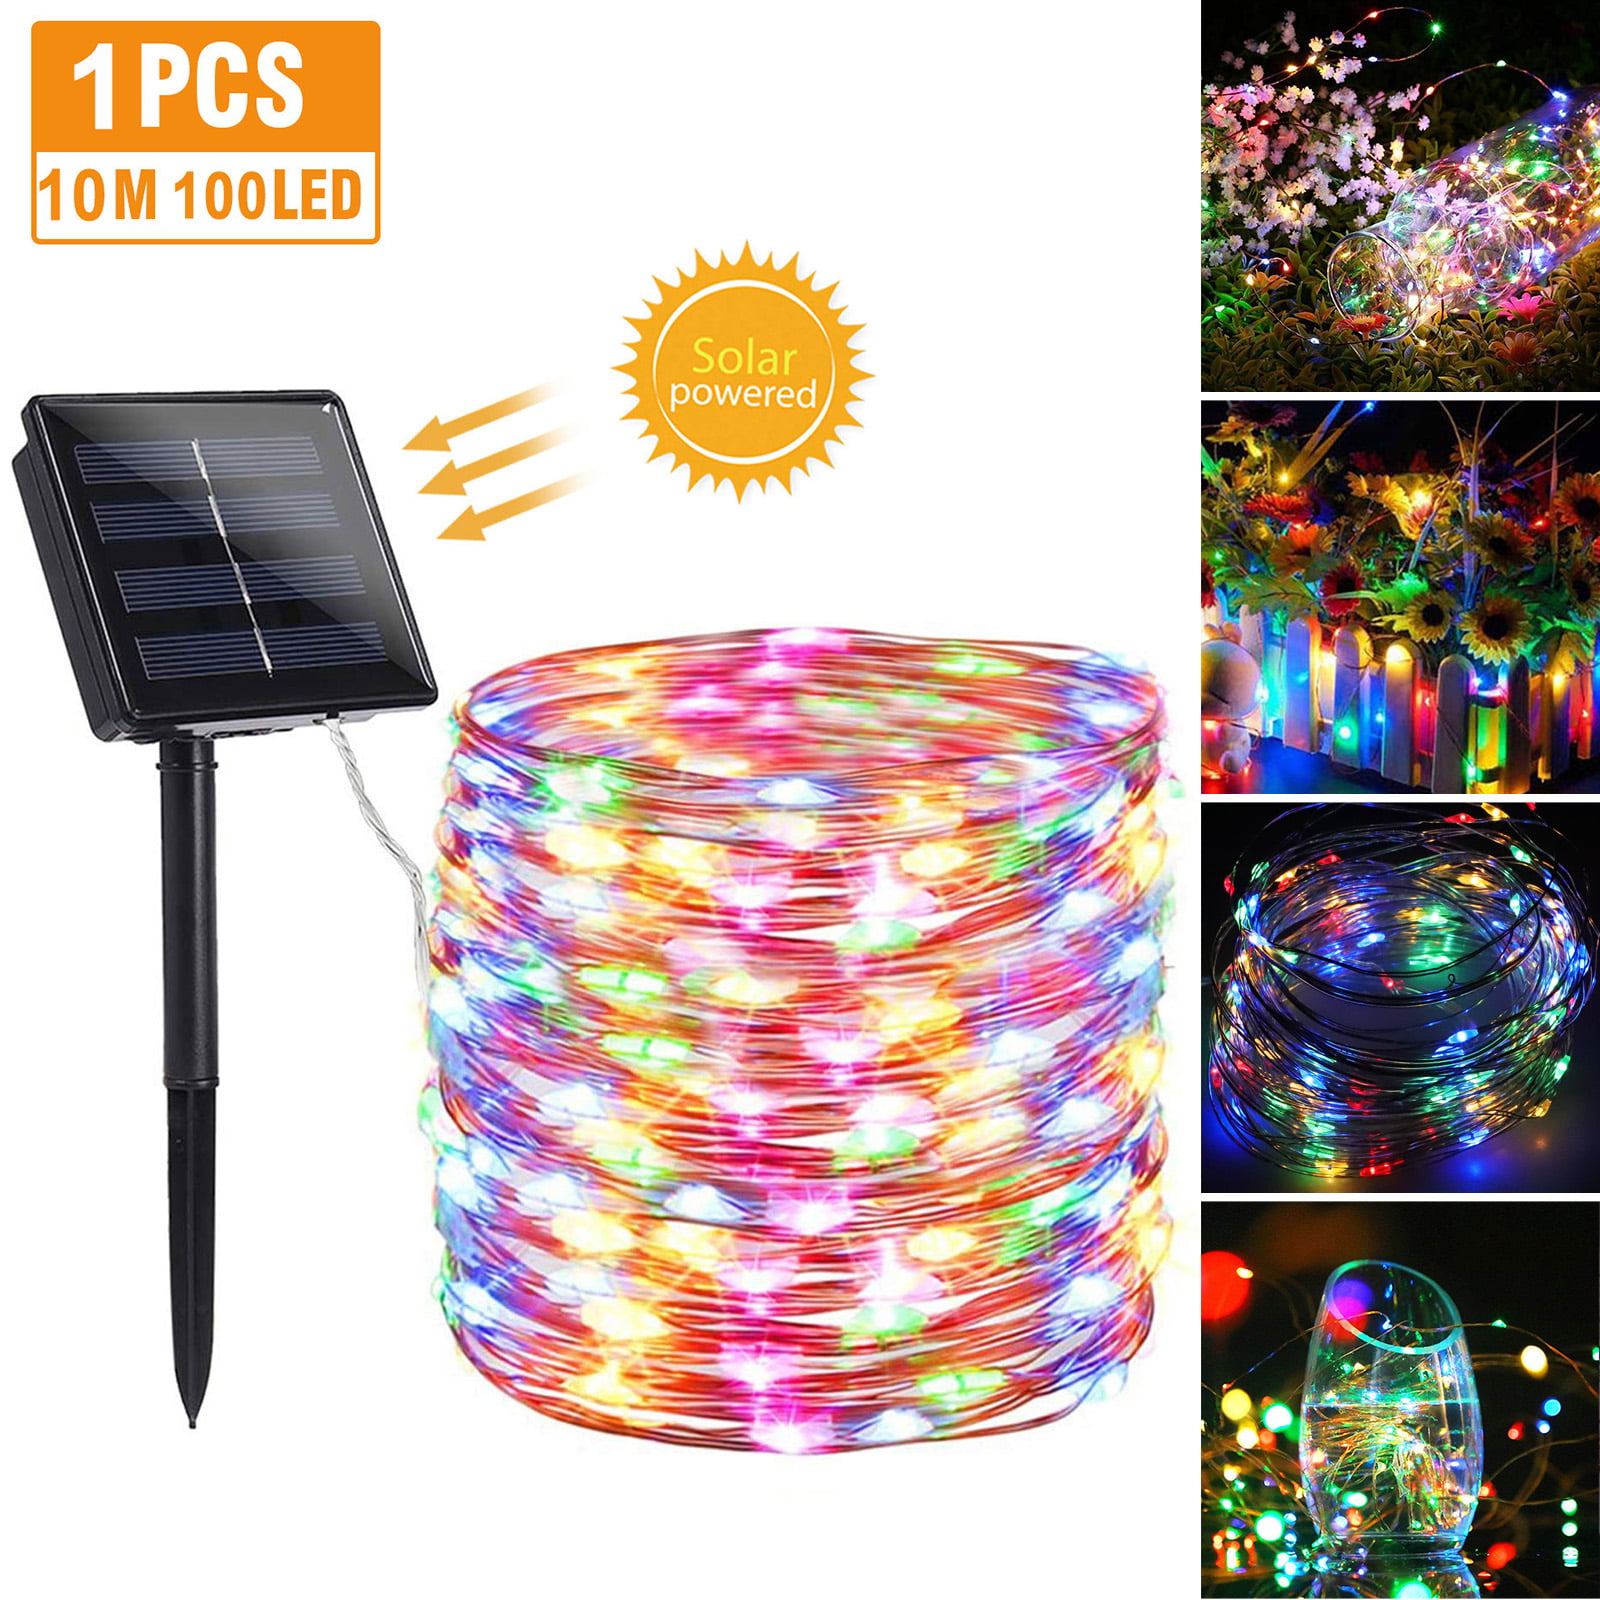 100 LED Solar String Fairy Light Garden Christmas Outdoor Party Decoration 10M